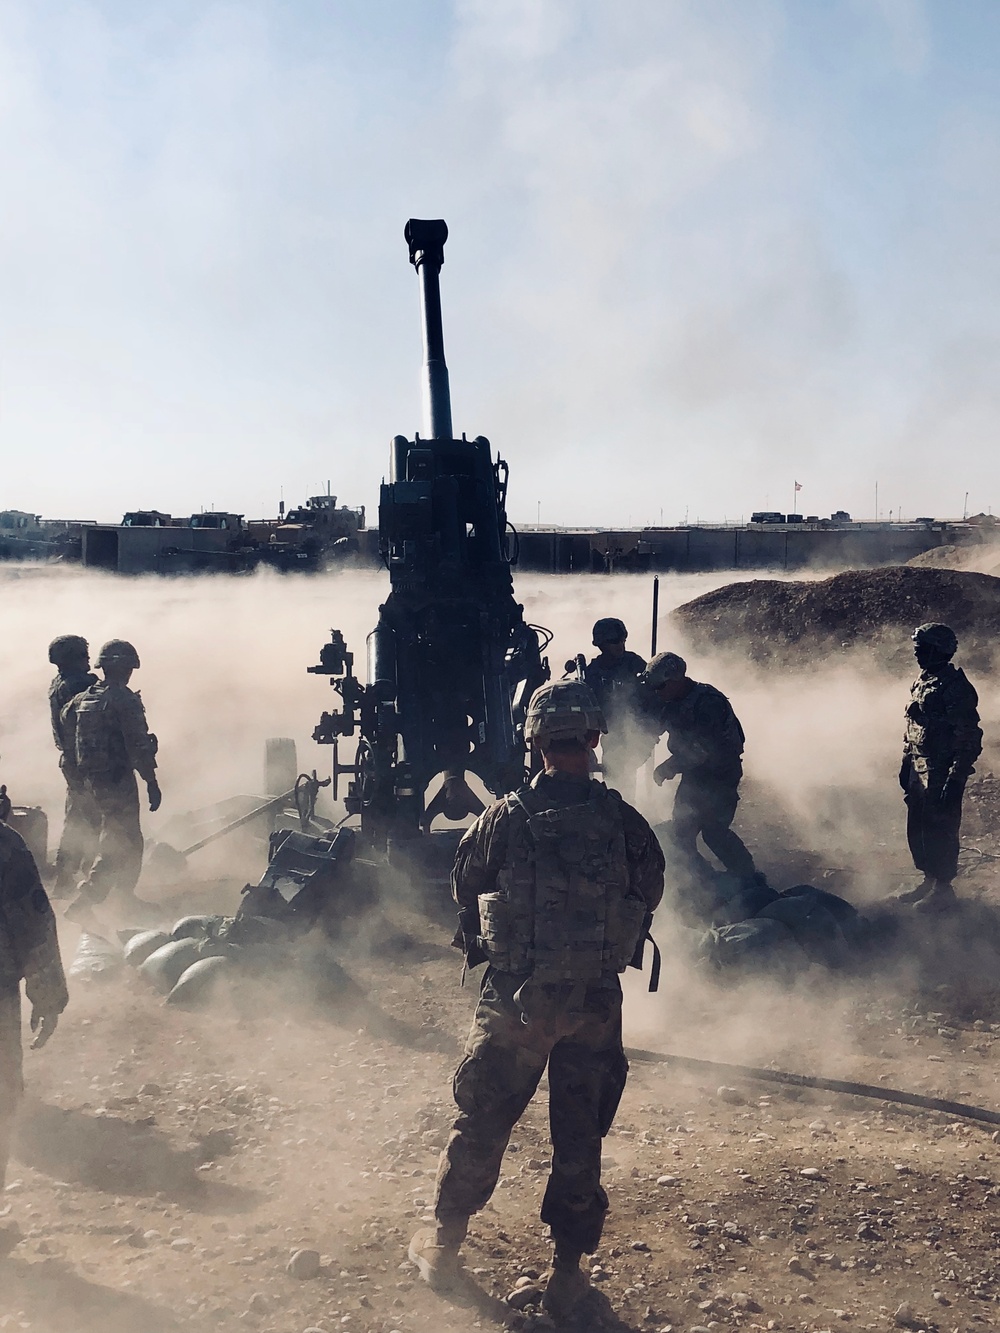 Brave Rifles Artillery in Iraq